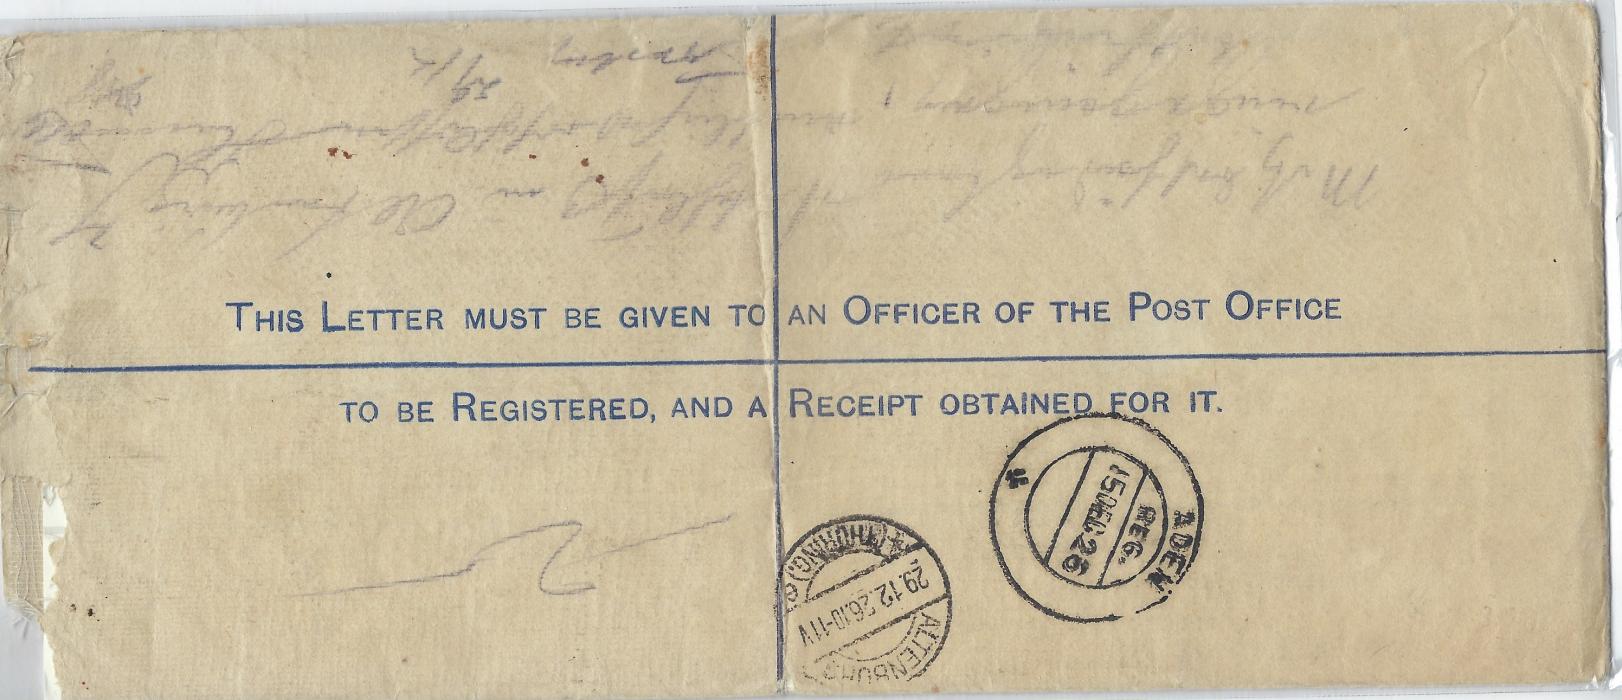 Aden 1926 long registered stationery envelope, endorsed 